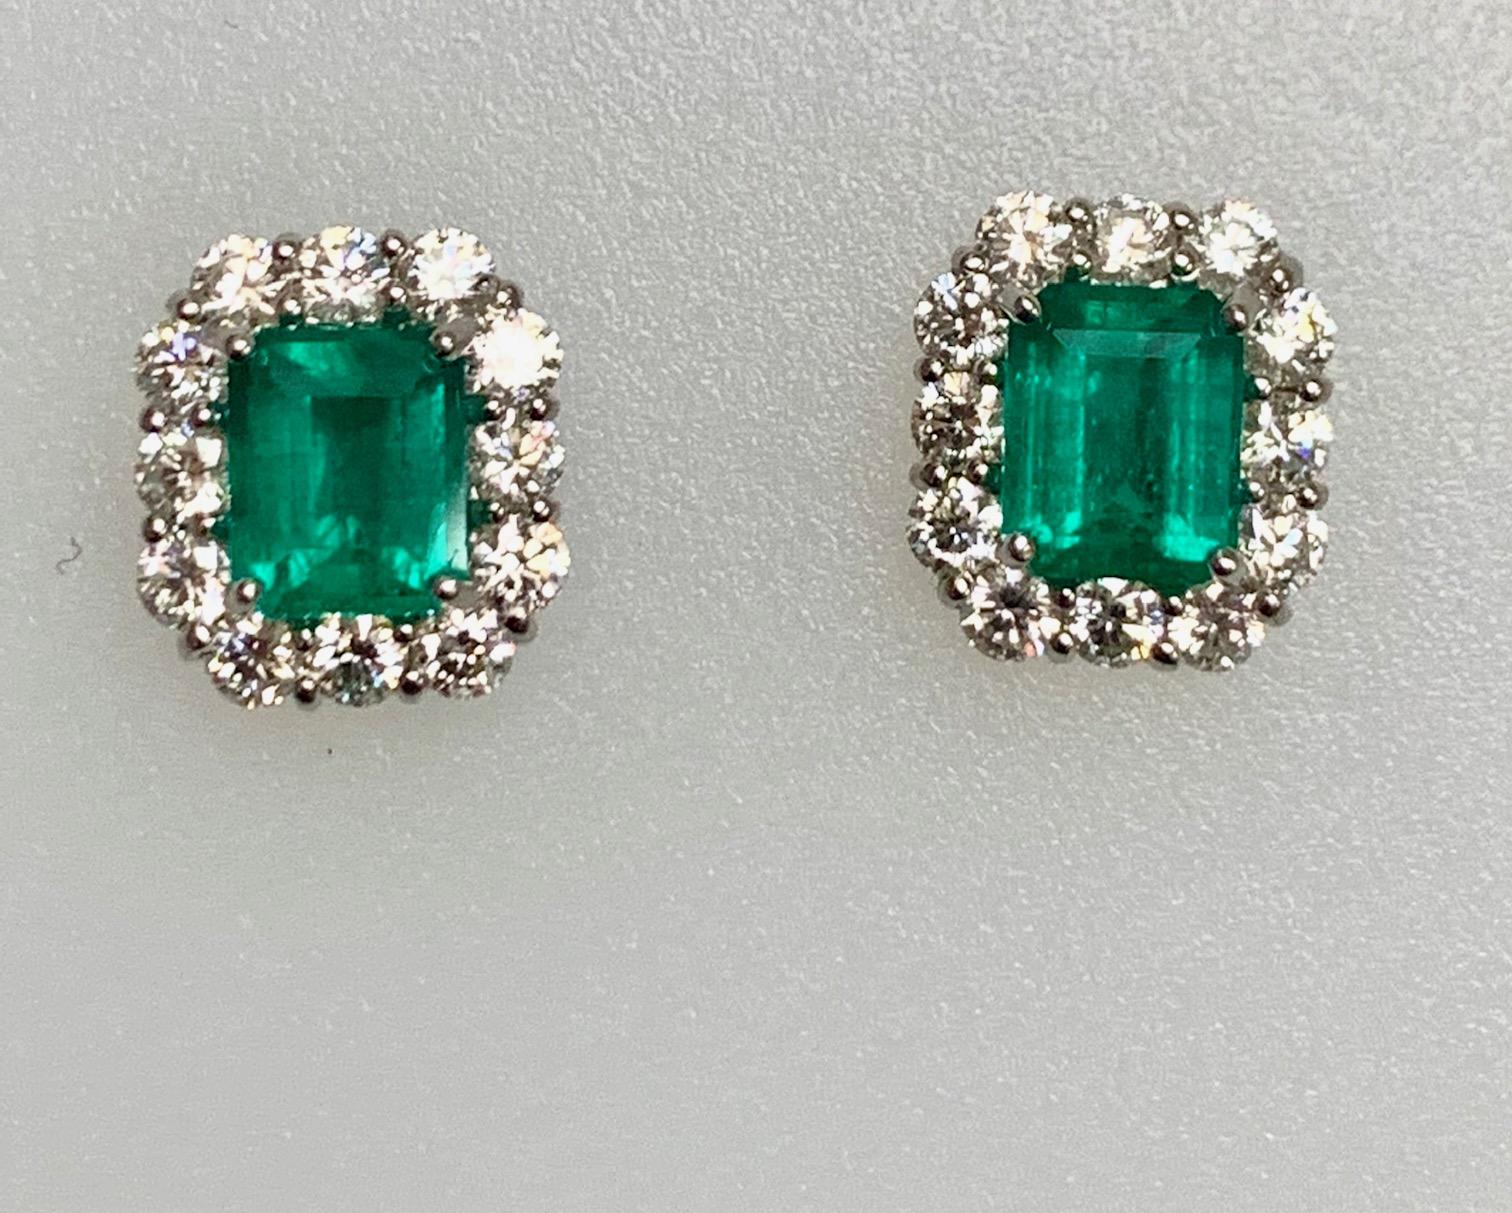 2.27 Carat Emerald cut Columbian emerald set in 18k whit gold earrings with 1.32 ct diamonds around it in classic earrings 